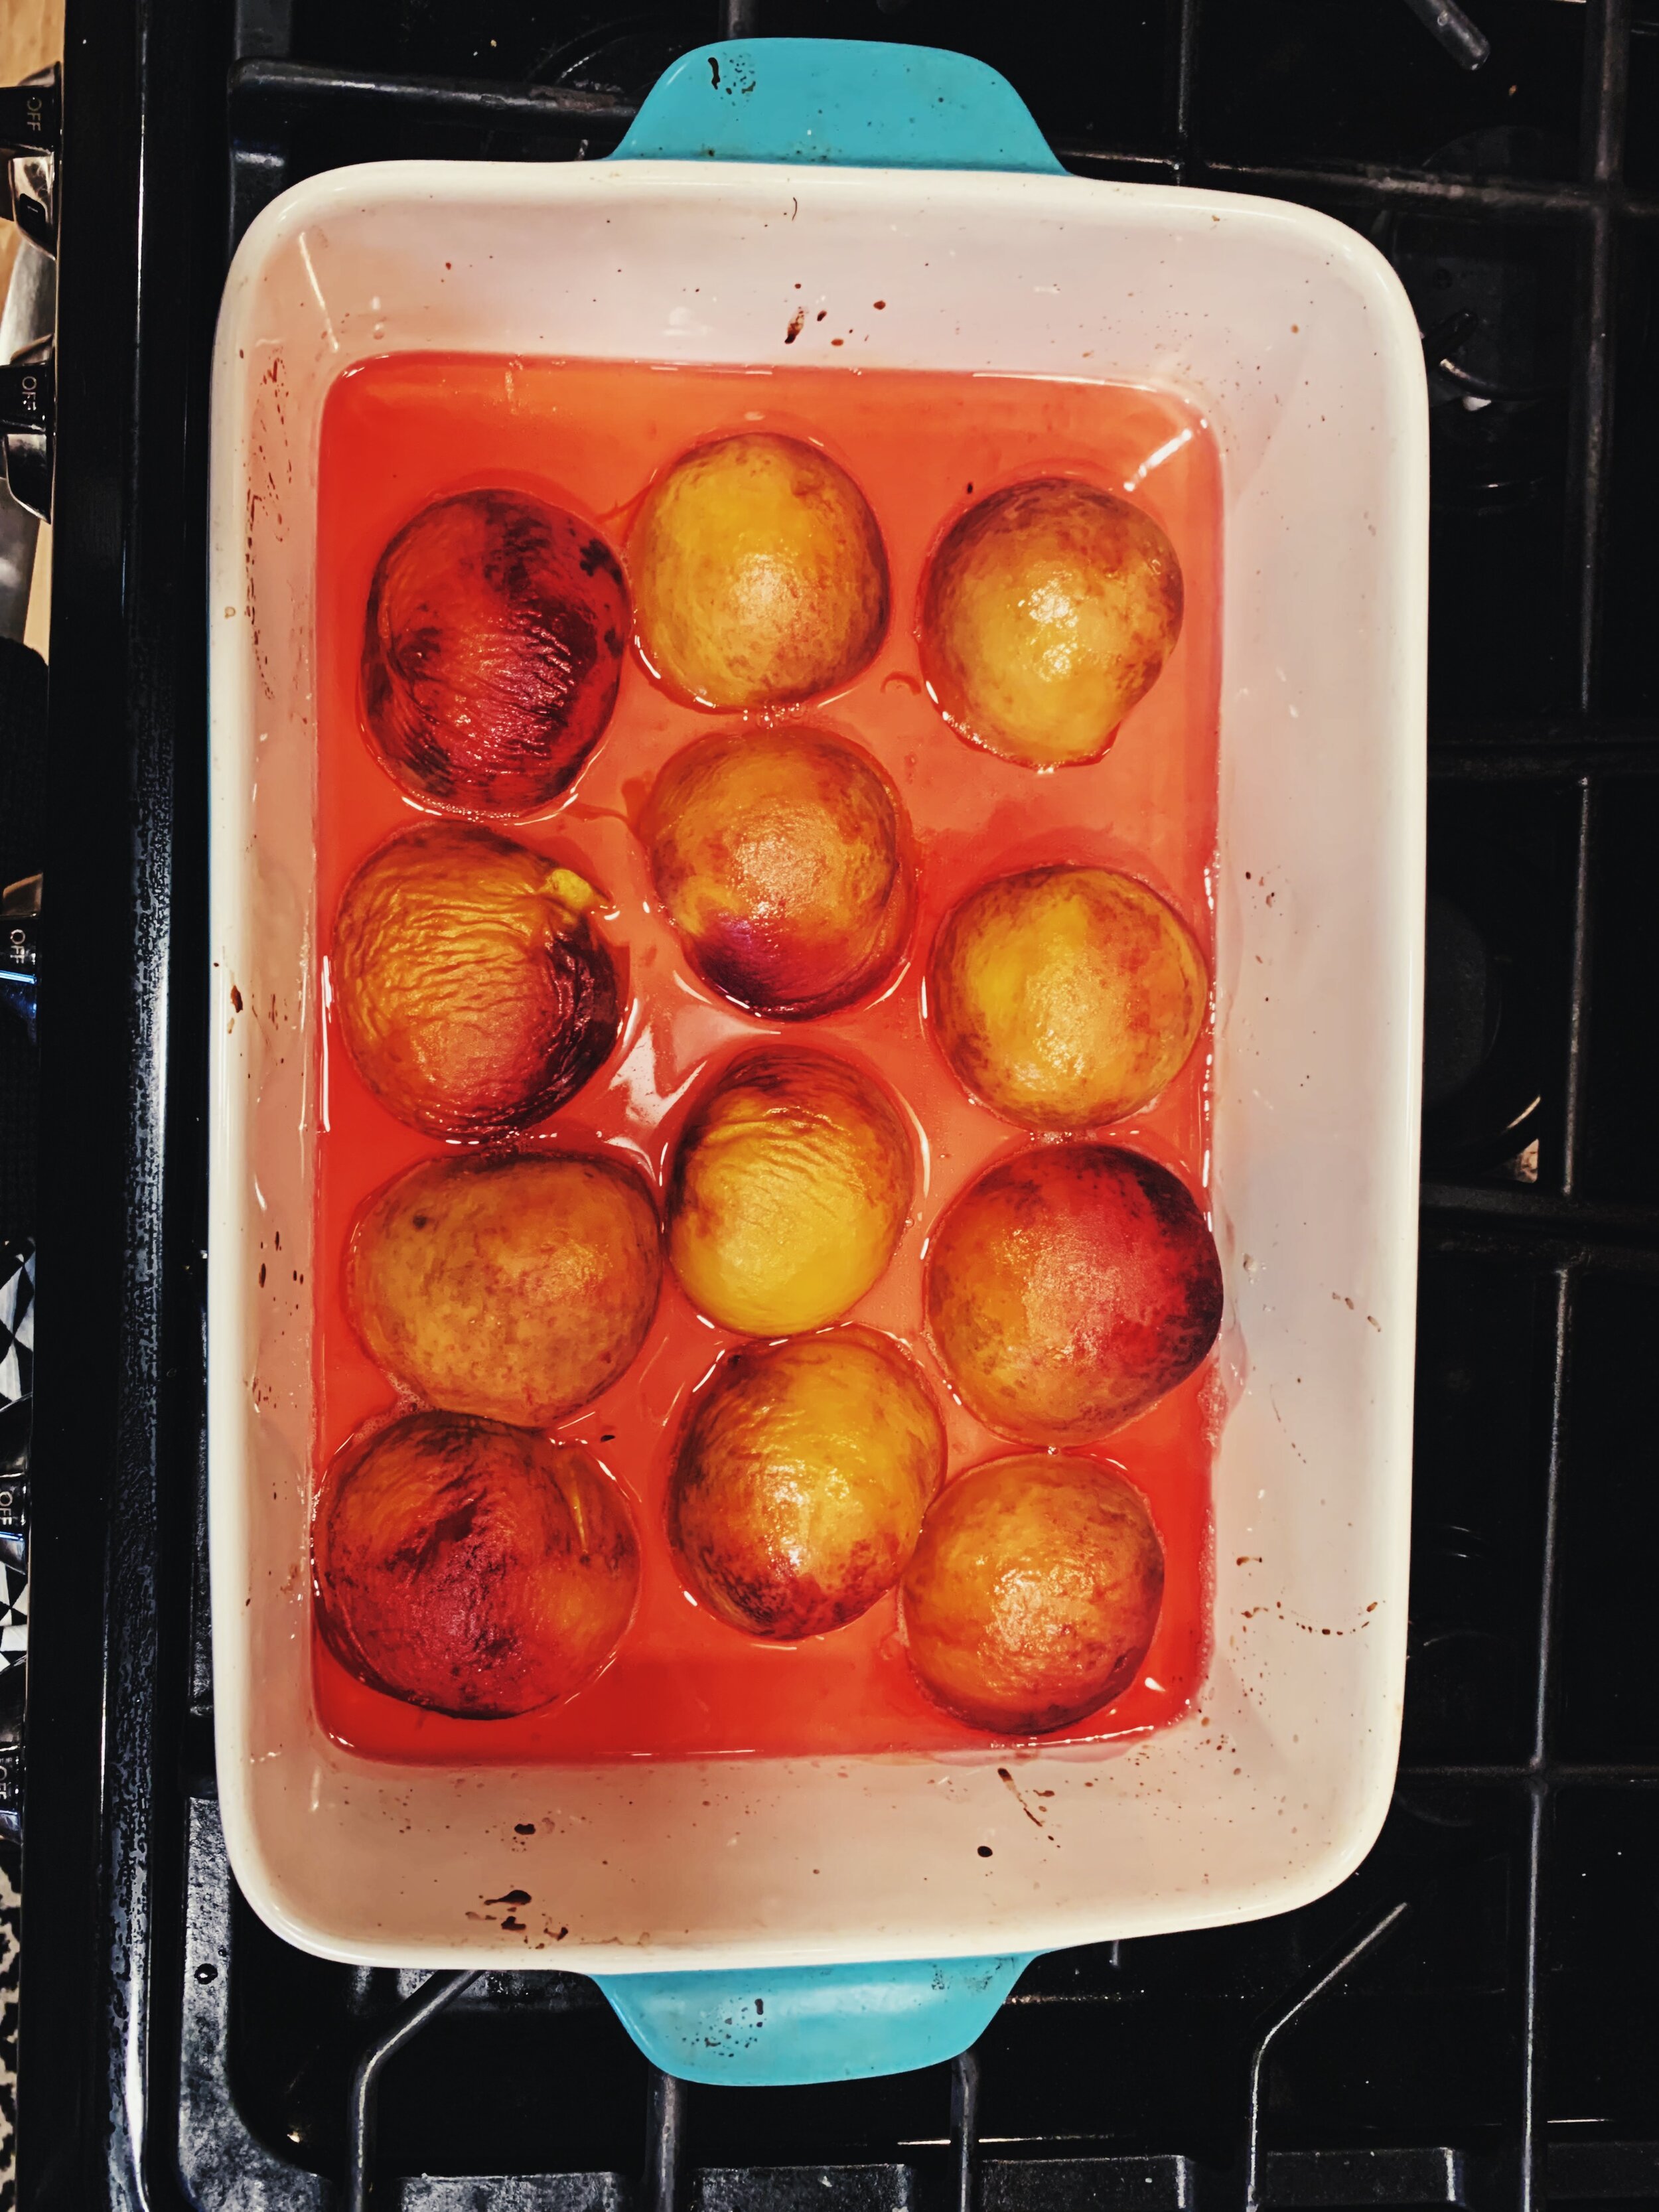 hibiscus-roasted-peaches-brown-sugar-bread-crumbs-alison-roman-oven.jpg